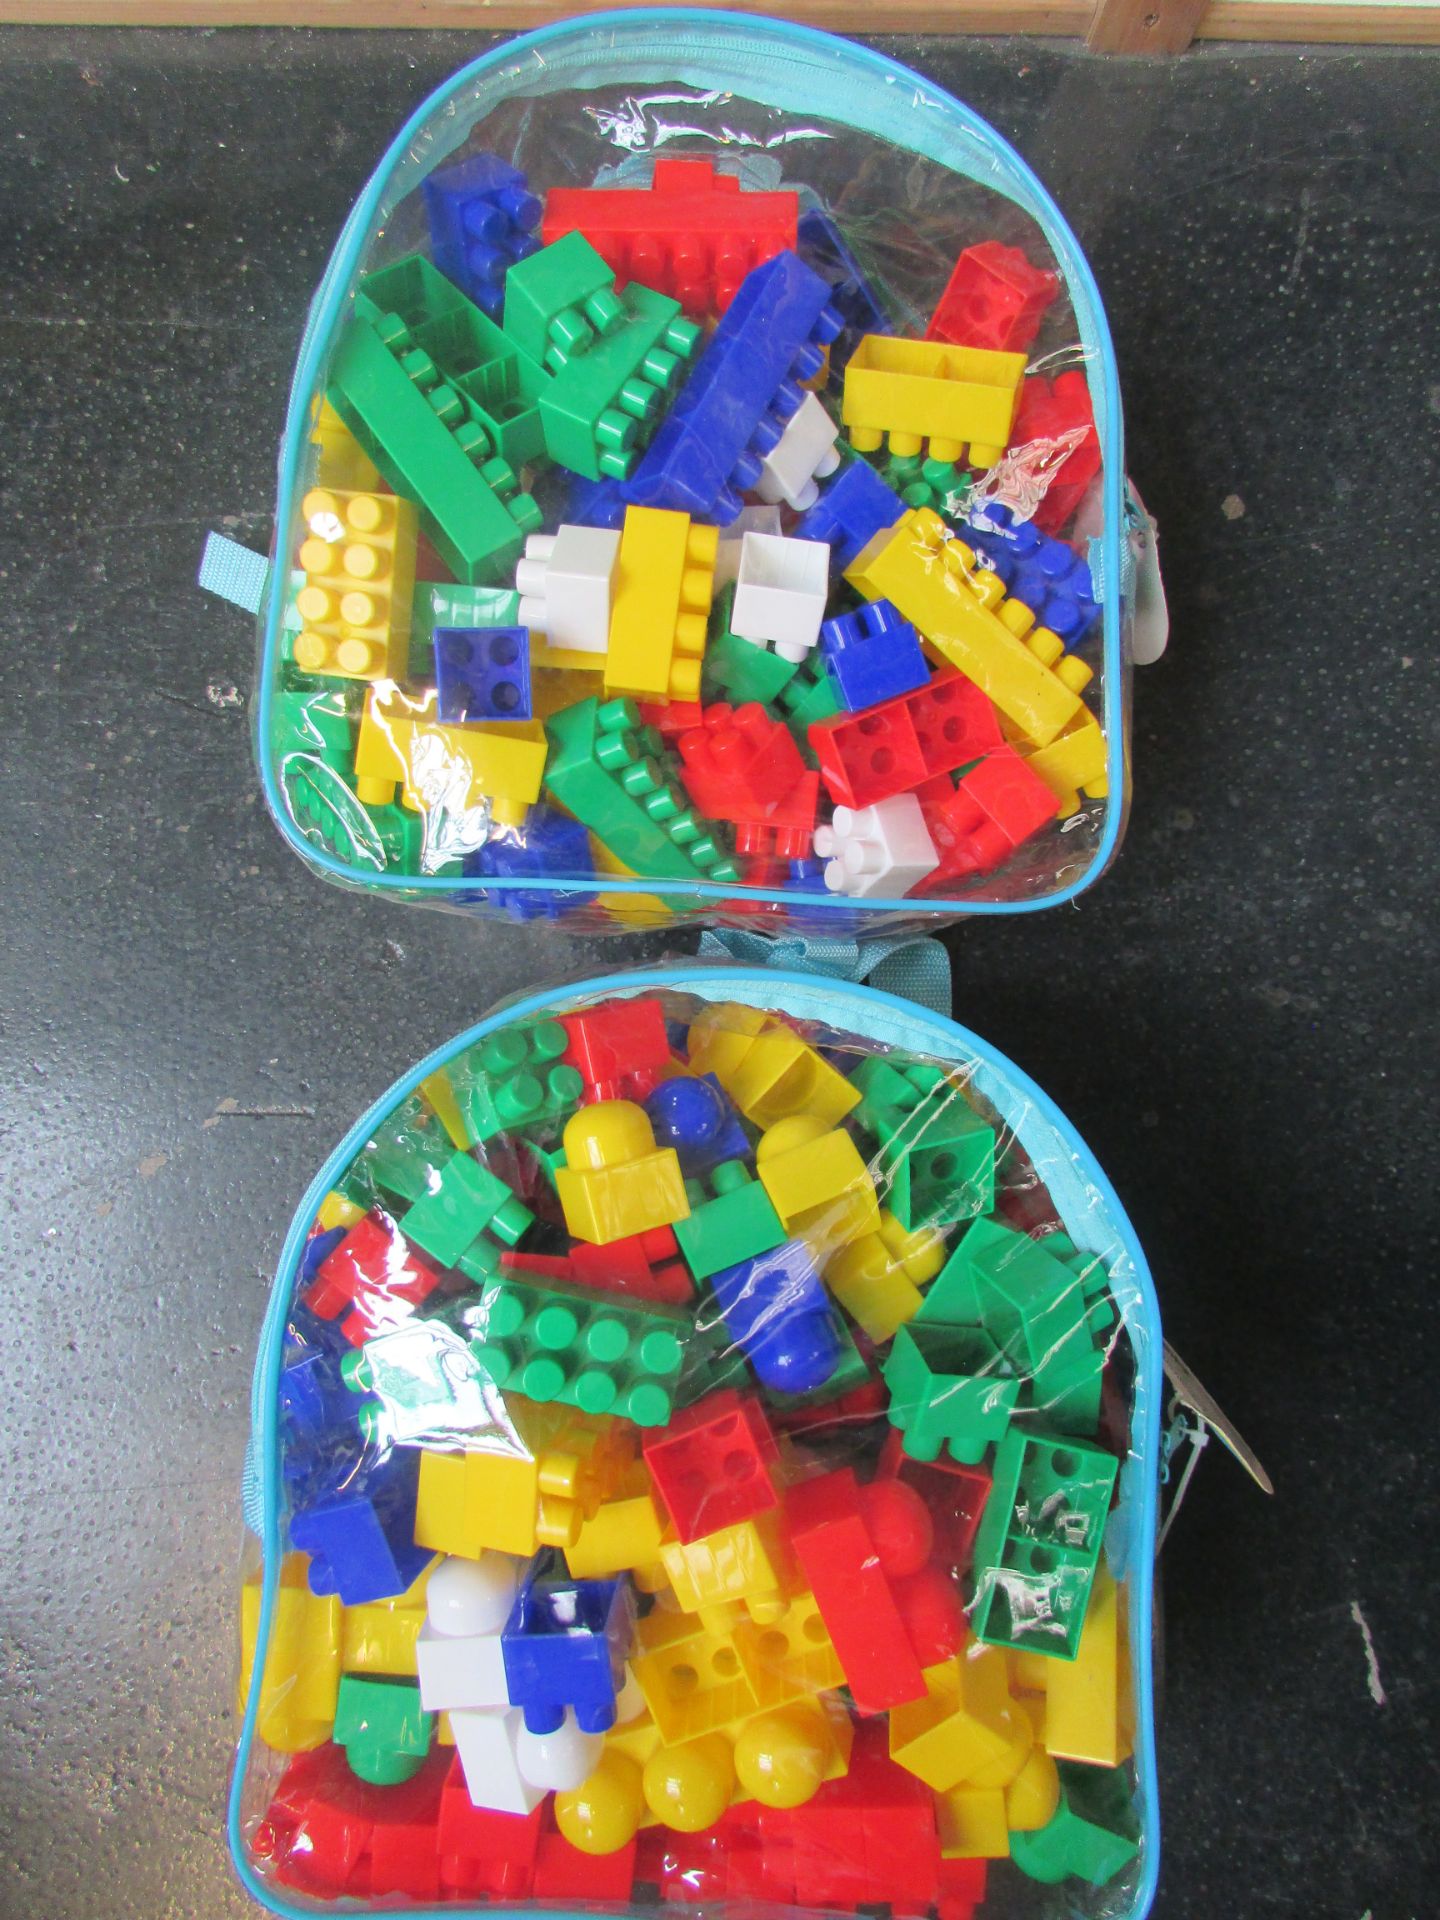 2 x Builder Supermix Construction Brick Toy Set in a Rucksack (144 Piece)